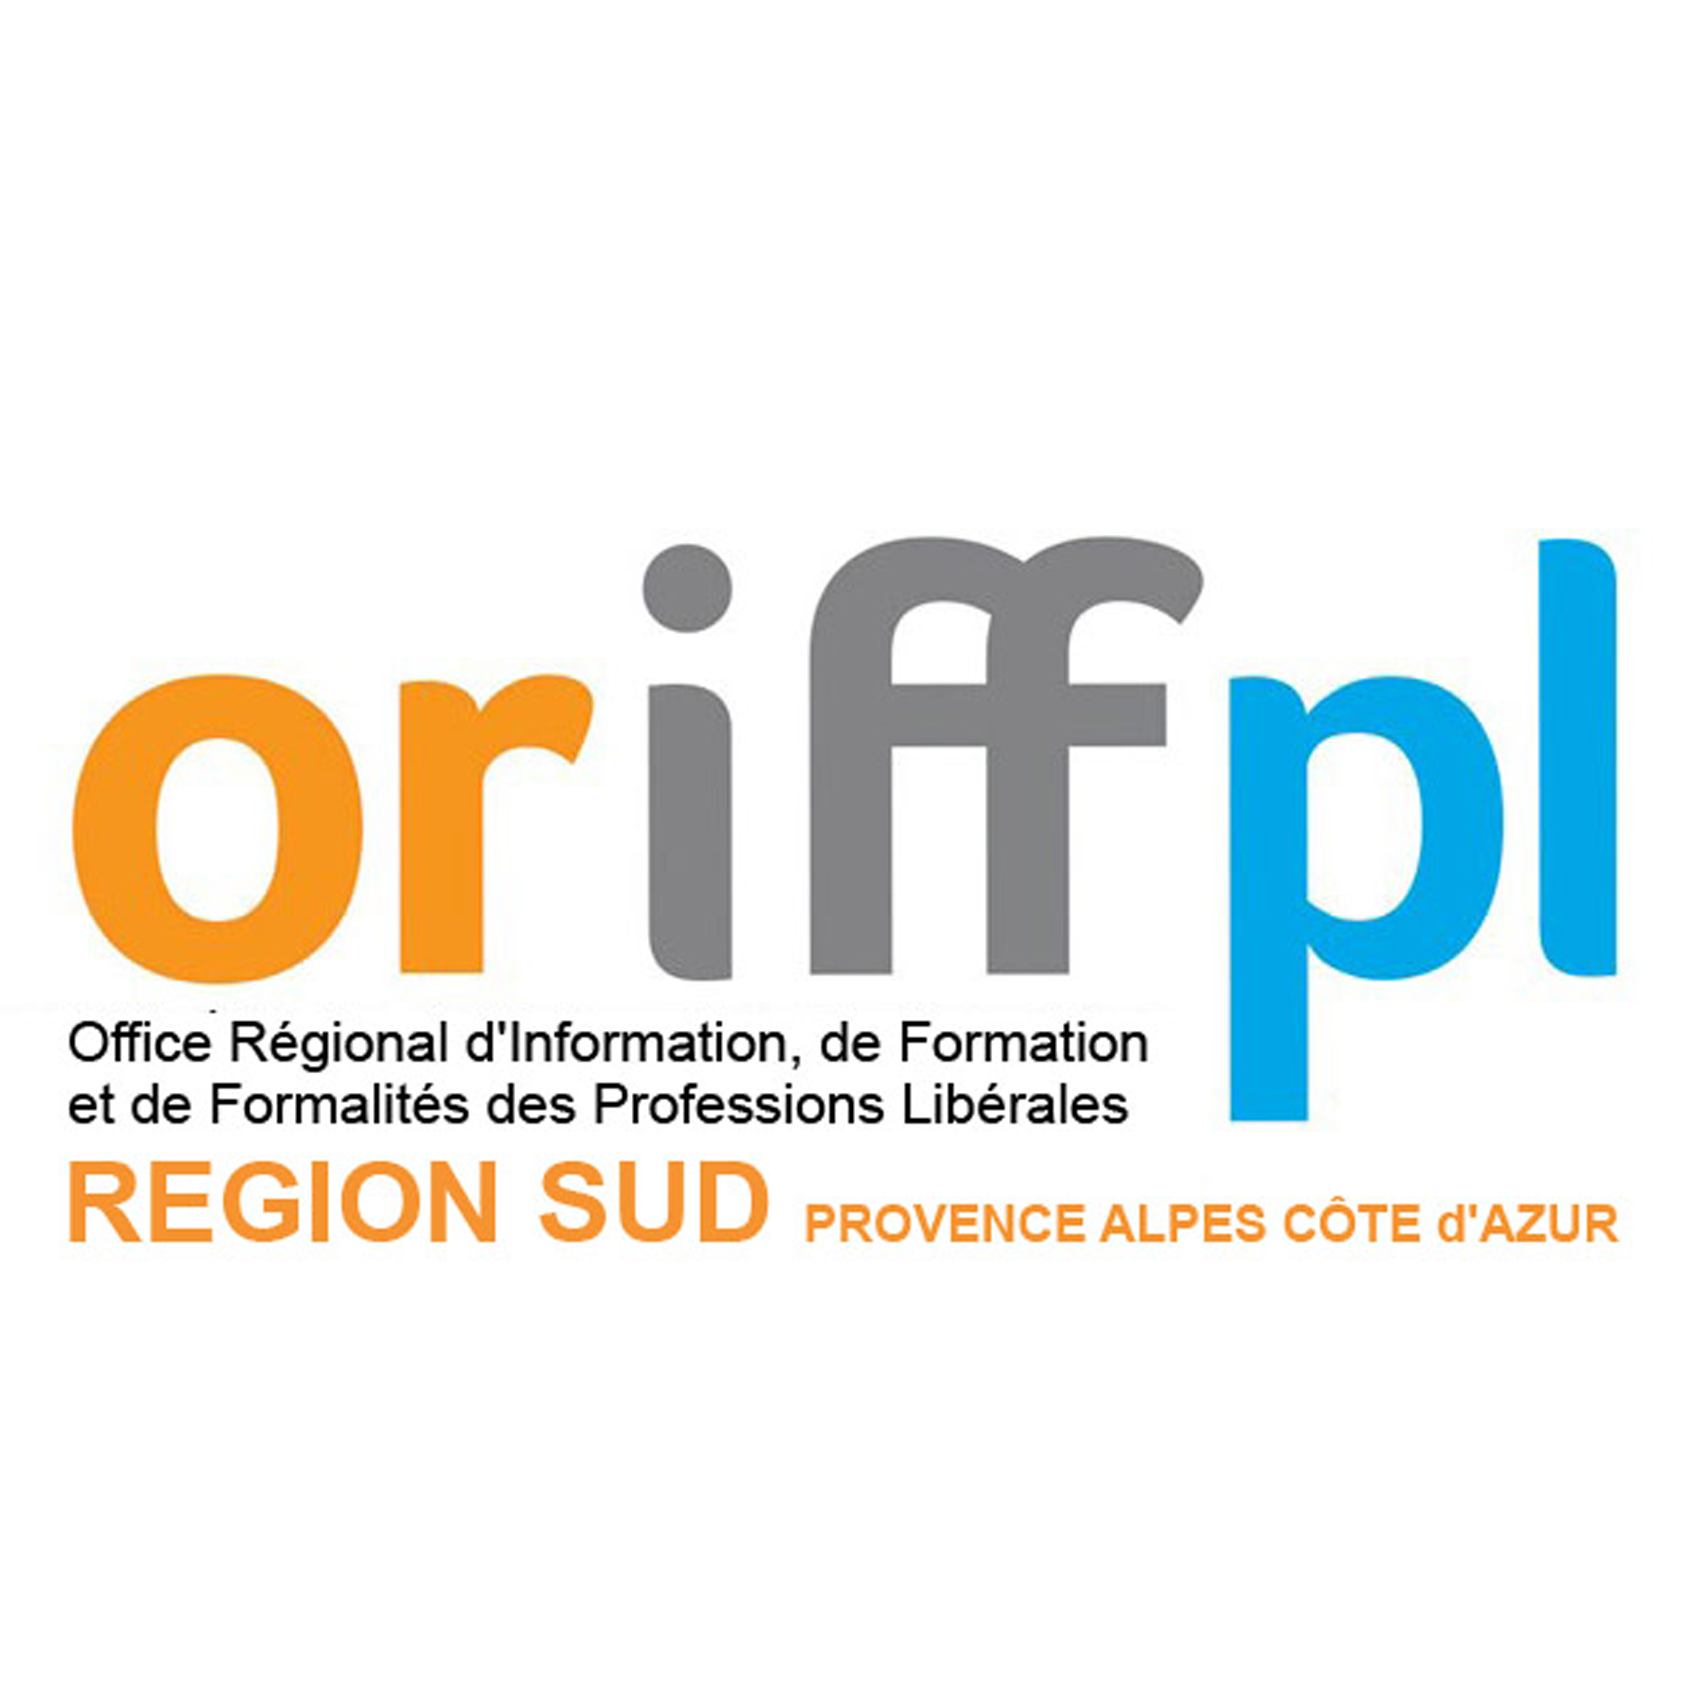 /files/oniff-pl/oriff-pl-region-sud/logos/oriffpl_region_sud-61b32aeb3362d.png